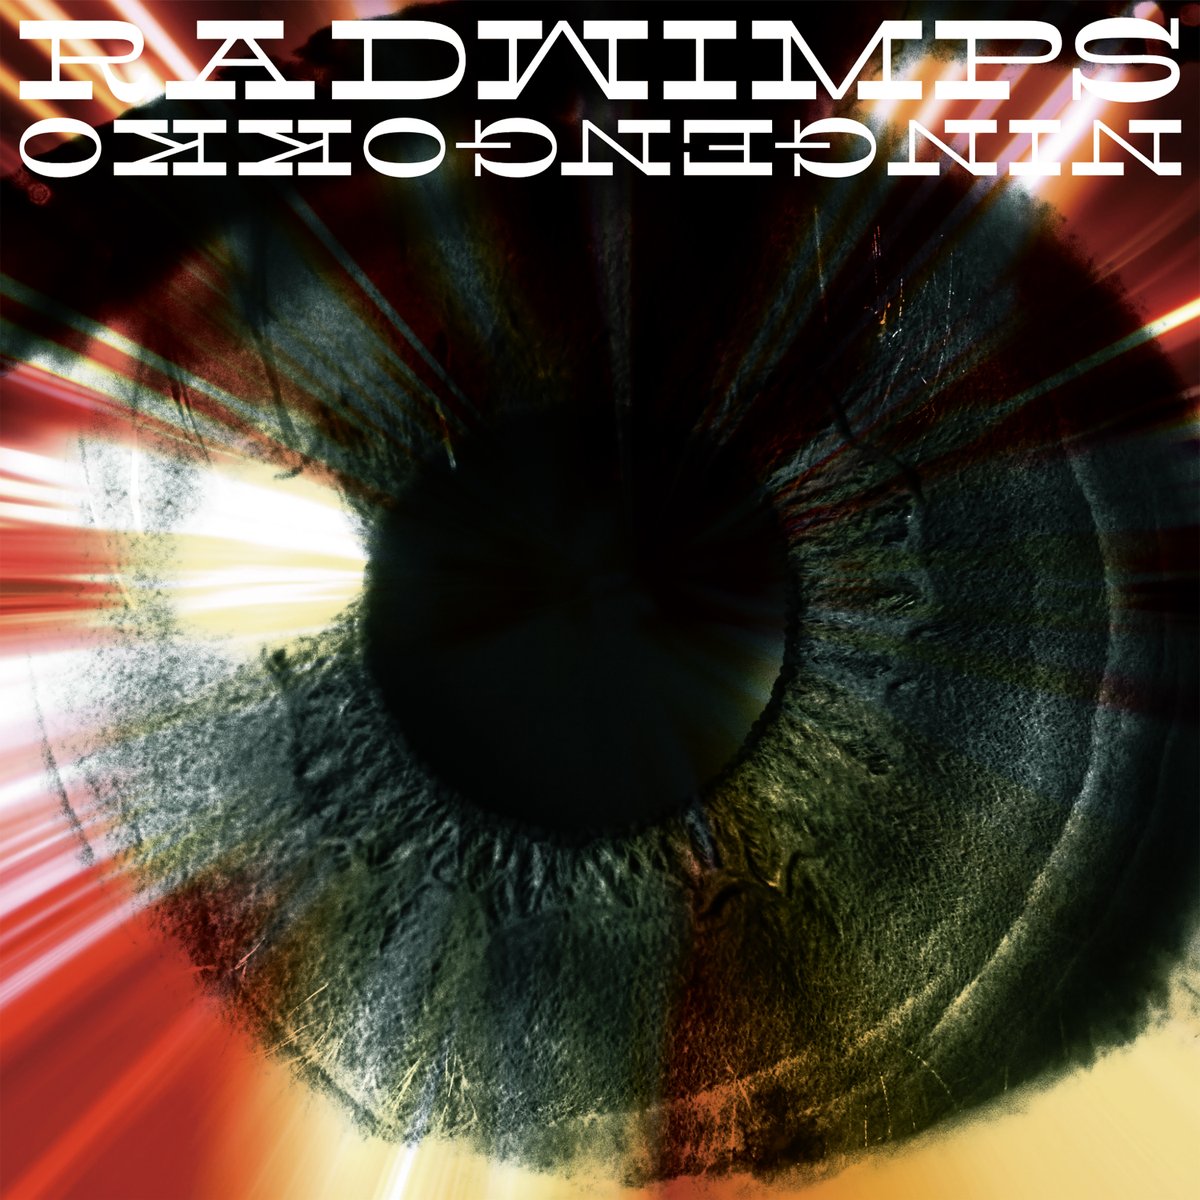 『RADWIMPS - 風たちの声 (Movie edit)』収録の『天気の子』ジャケット